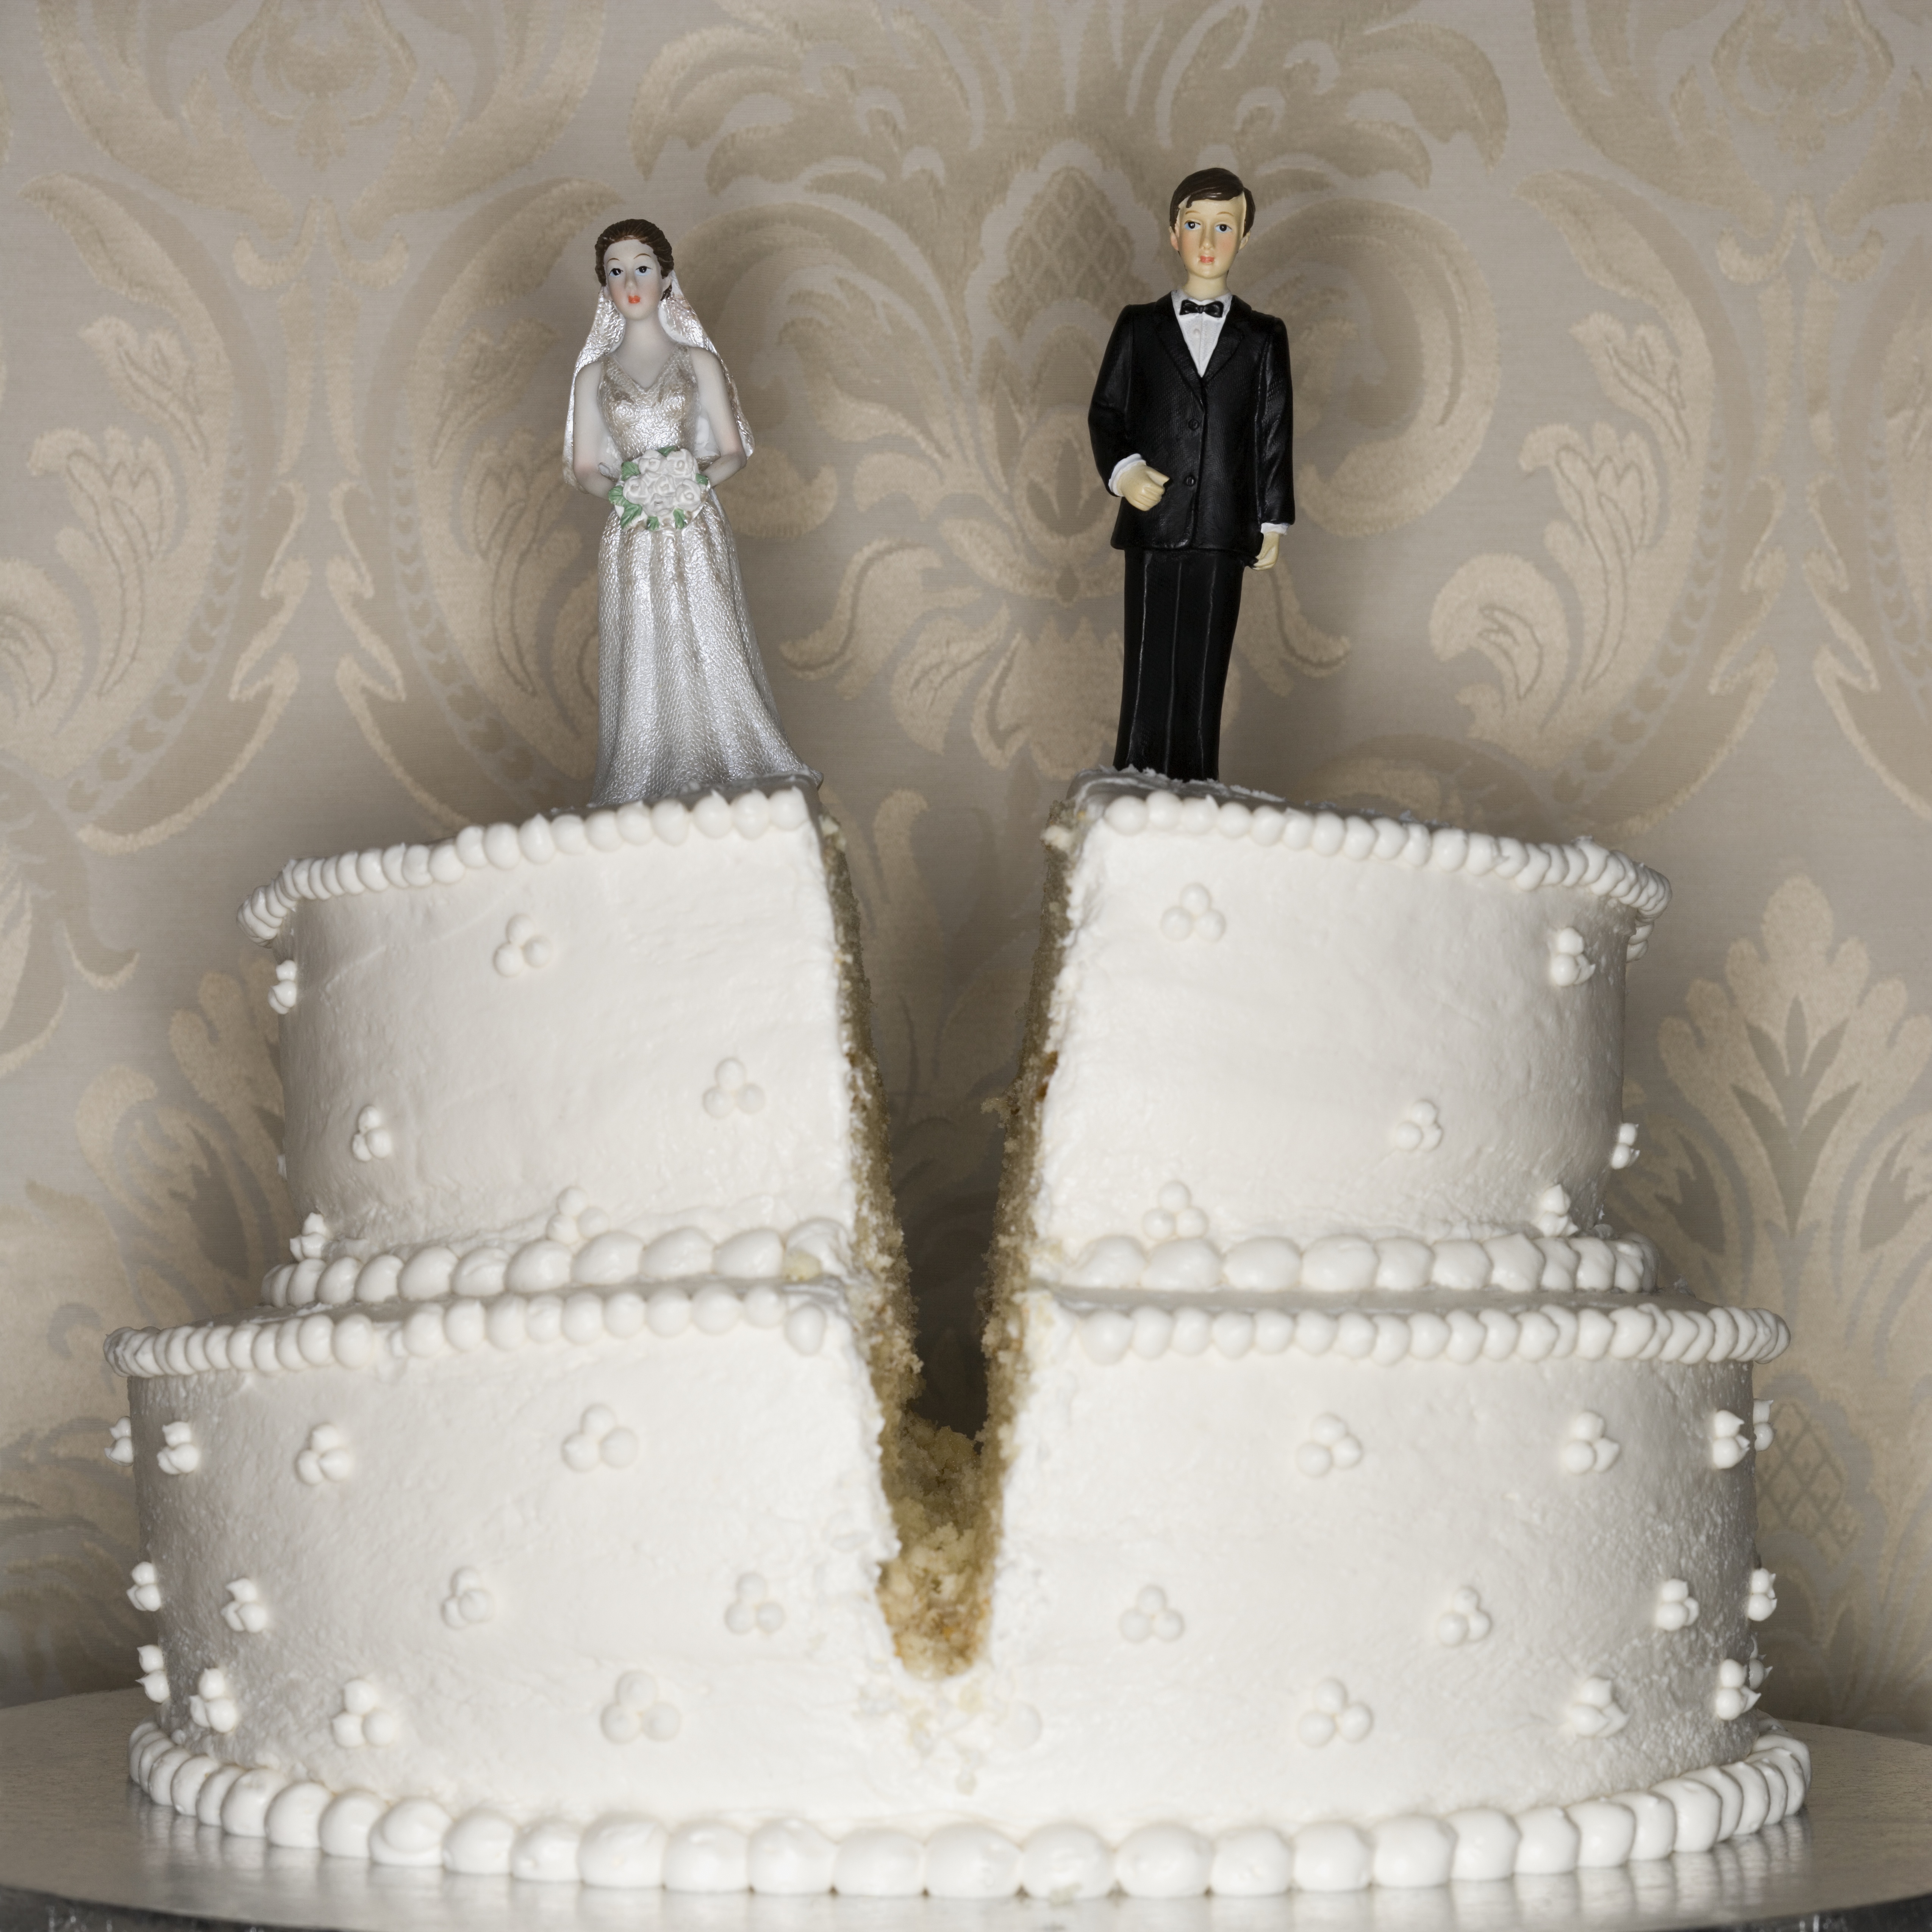 Муж придет на развод. Свадьба и развод. Торт на развод. Торт на развод для женщины. Торт развод с мужем.